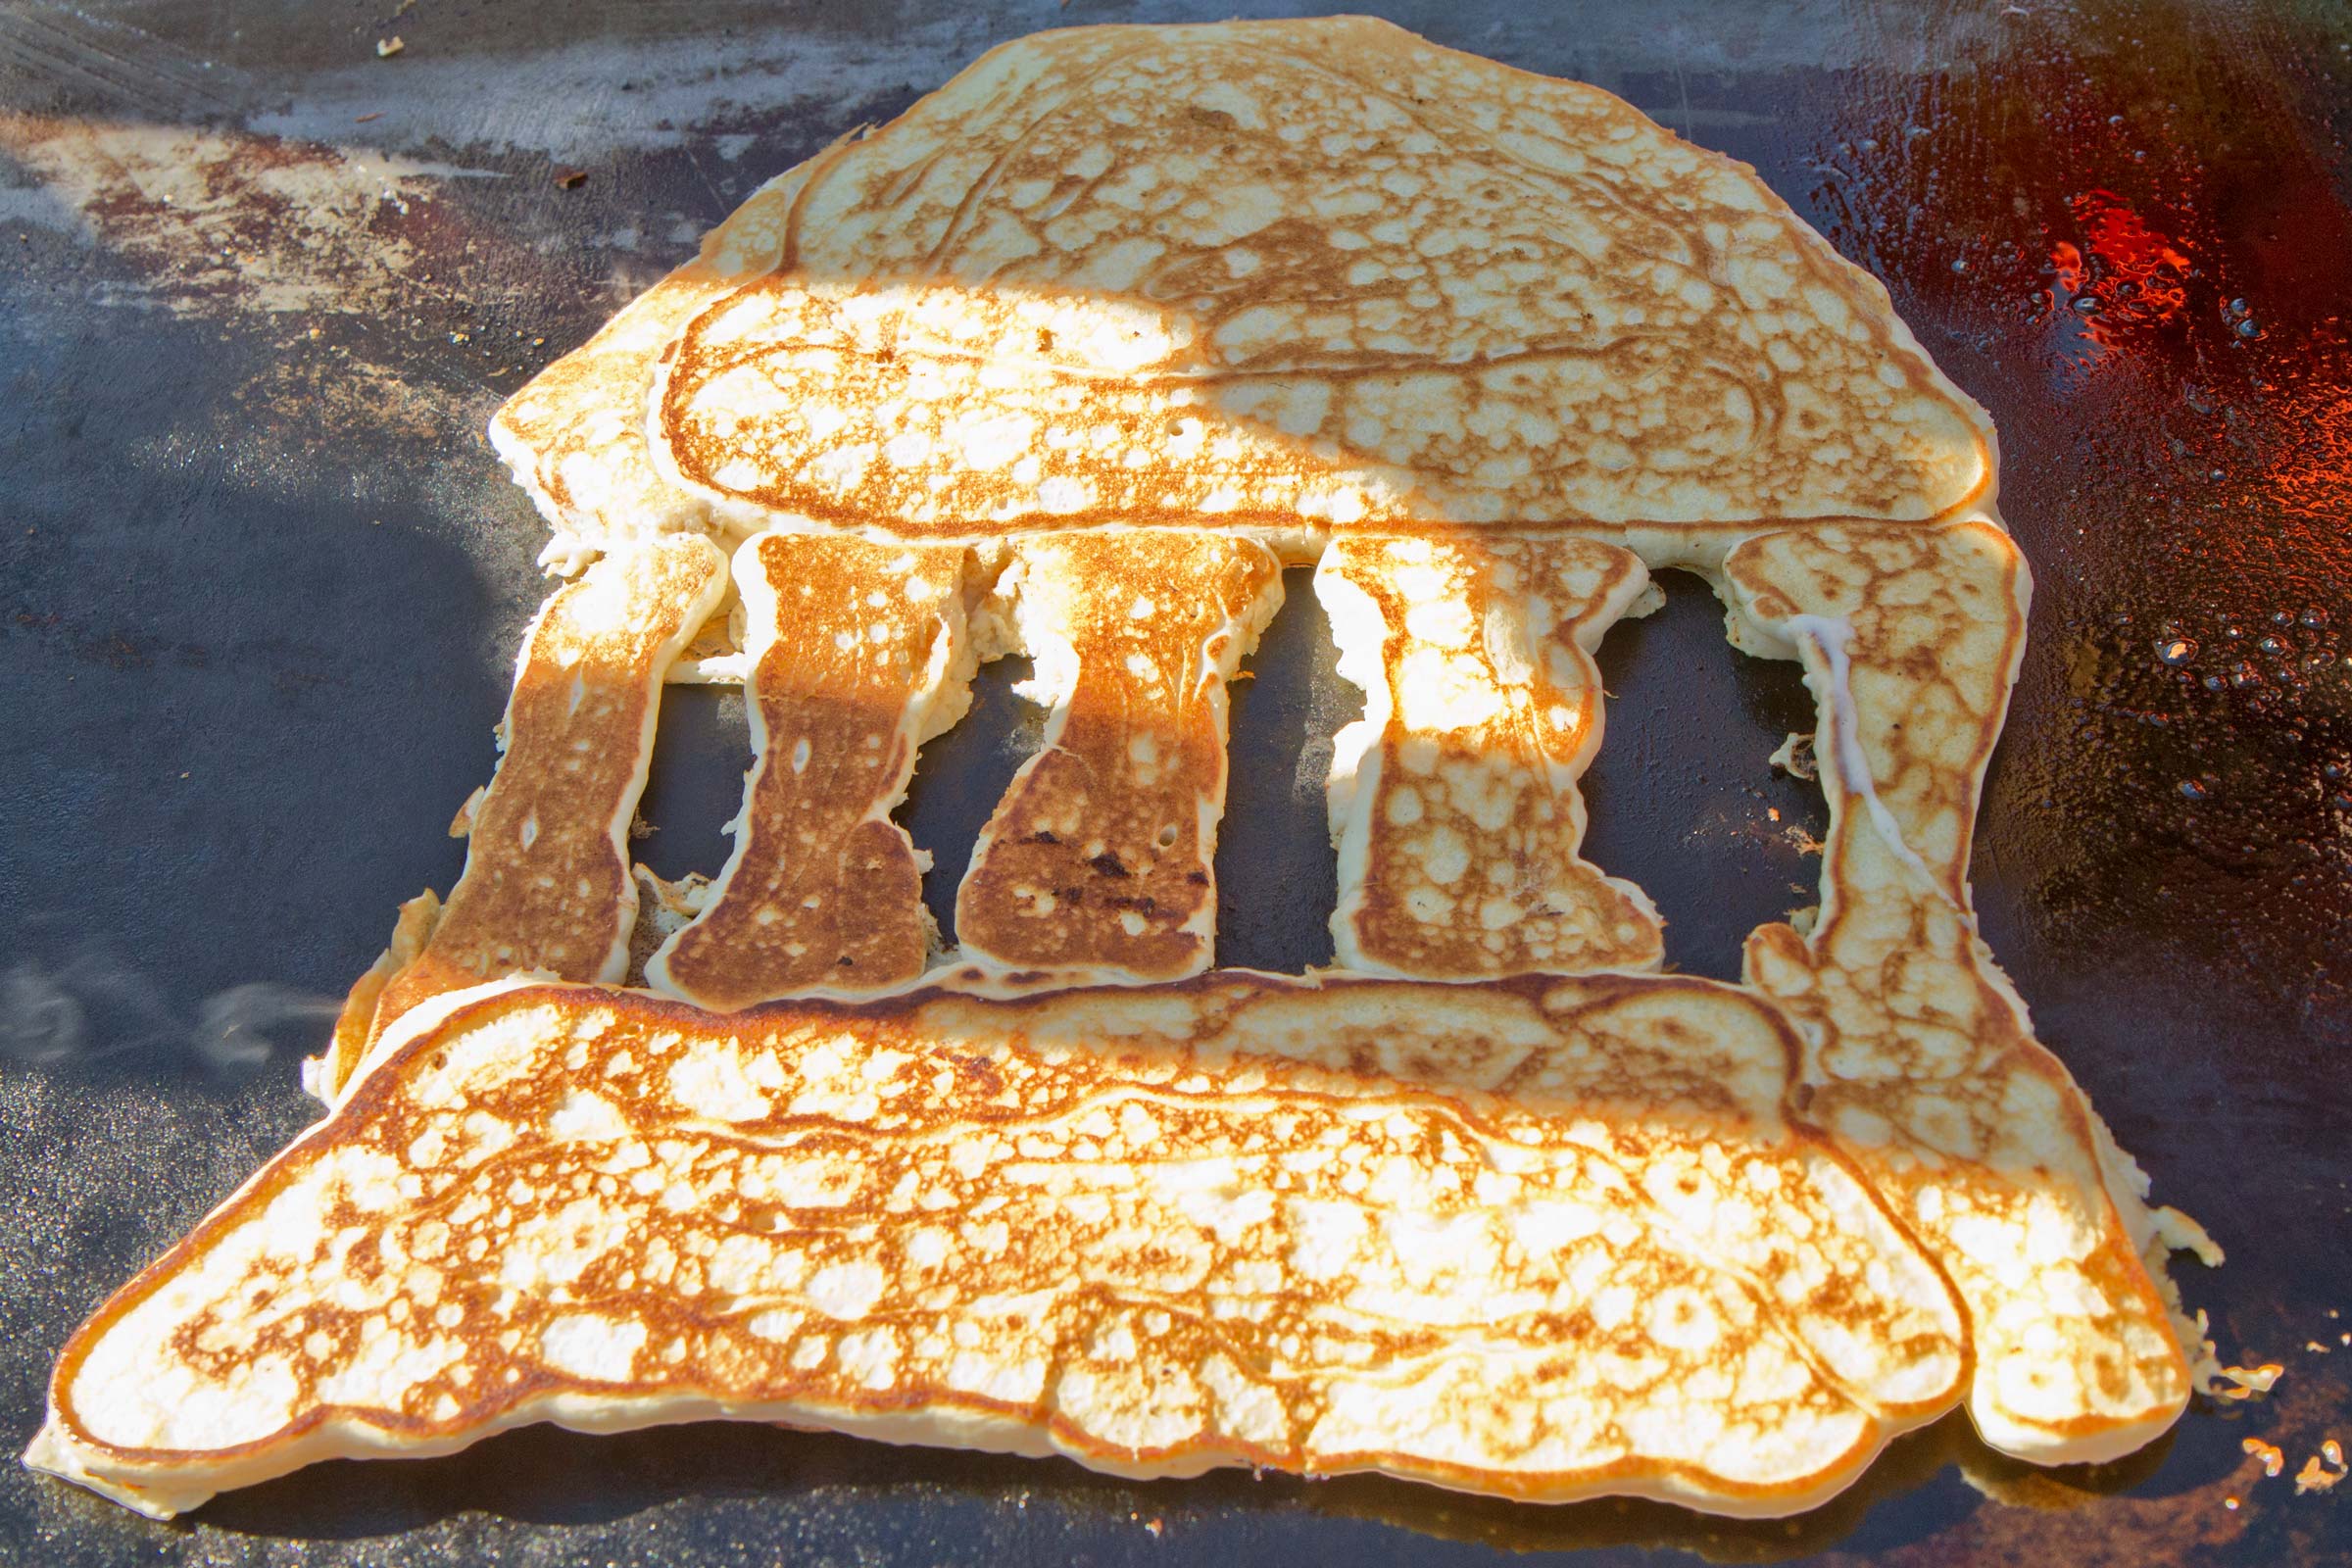 Pancake in the shape of the Rotunda